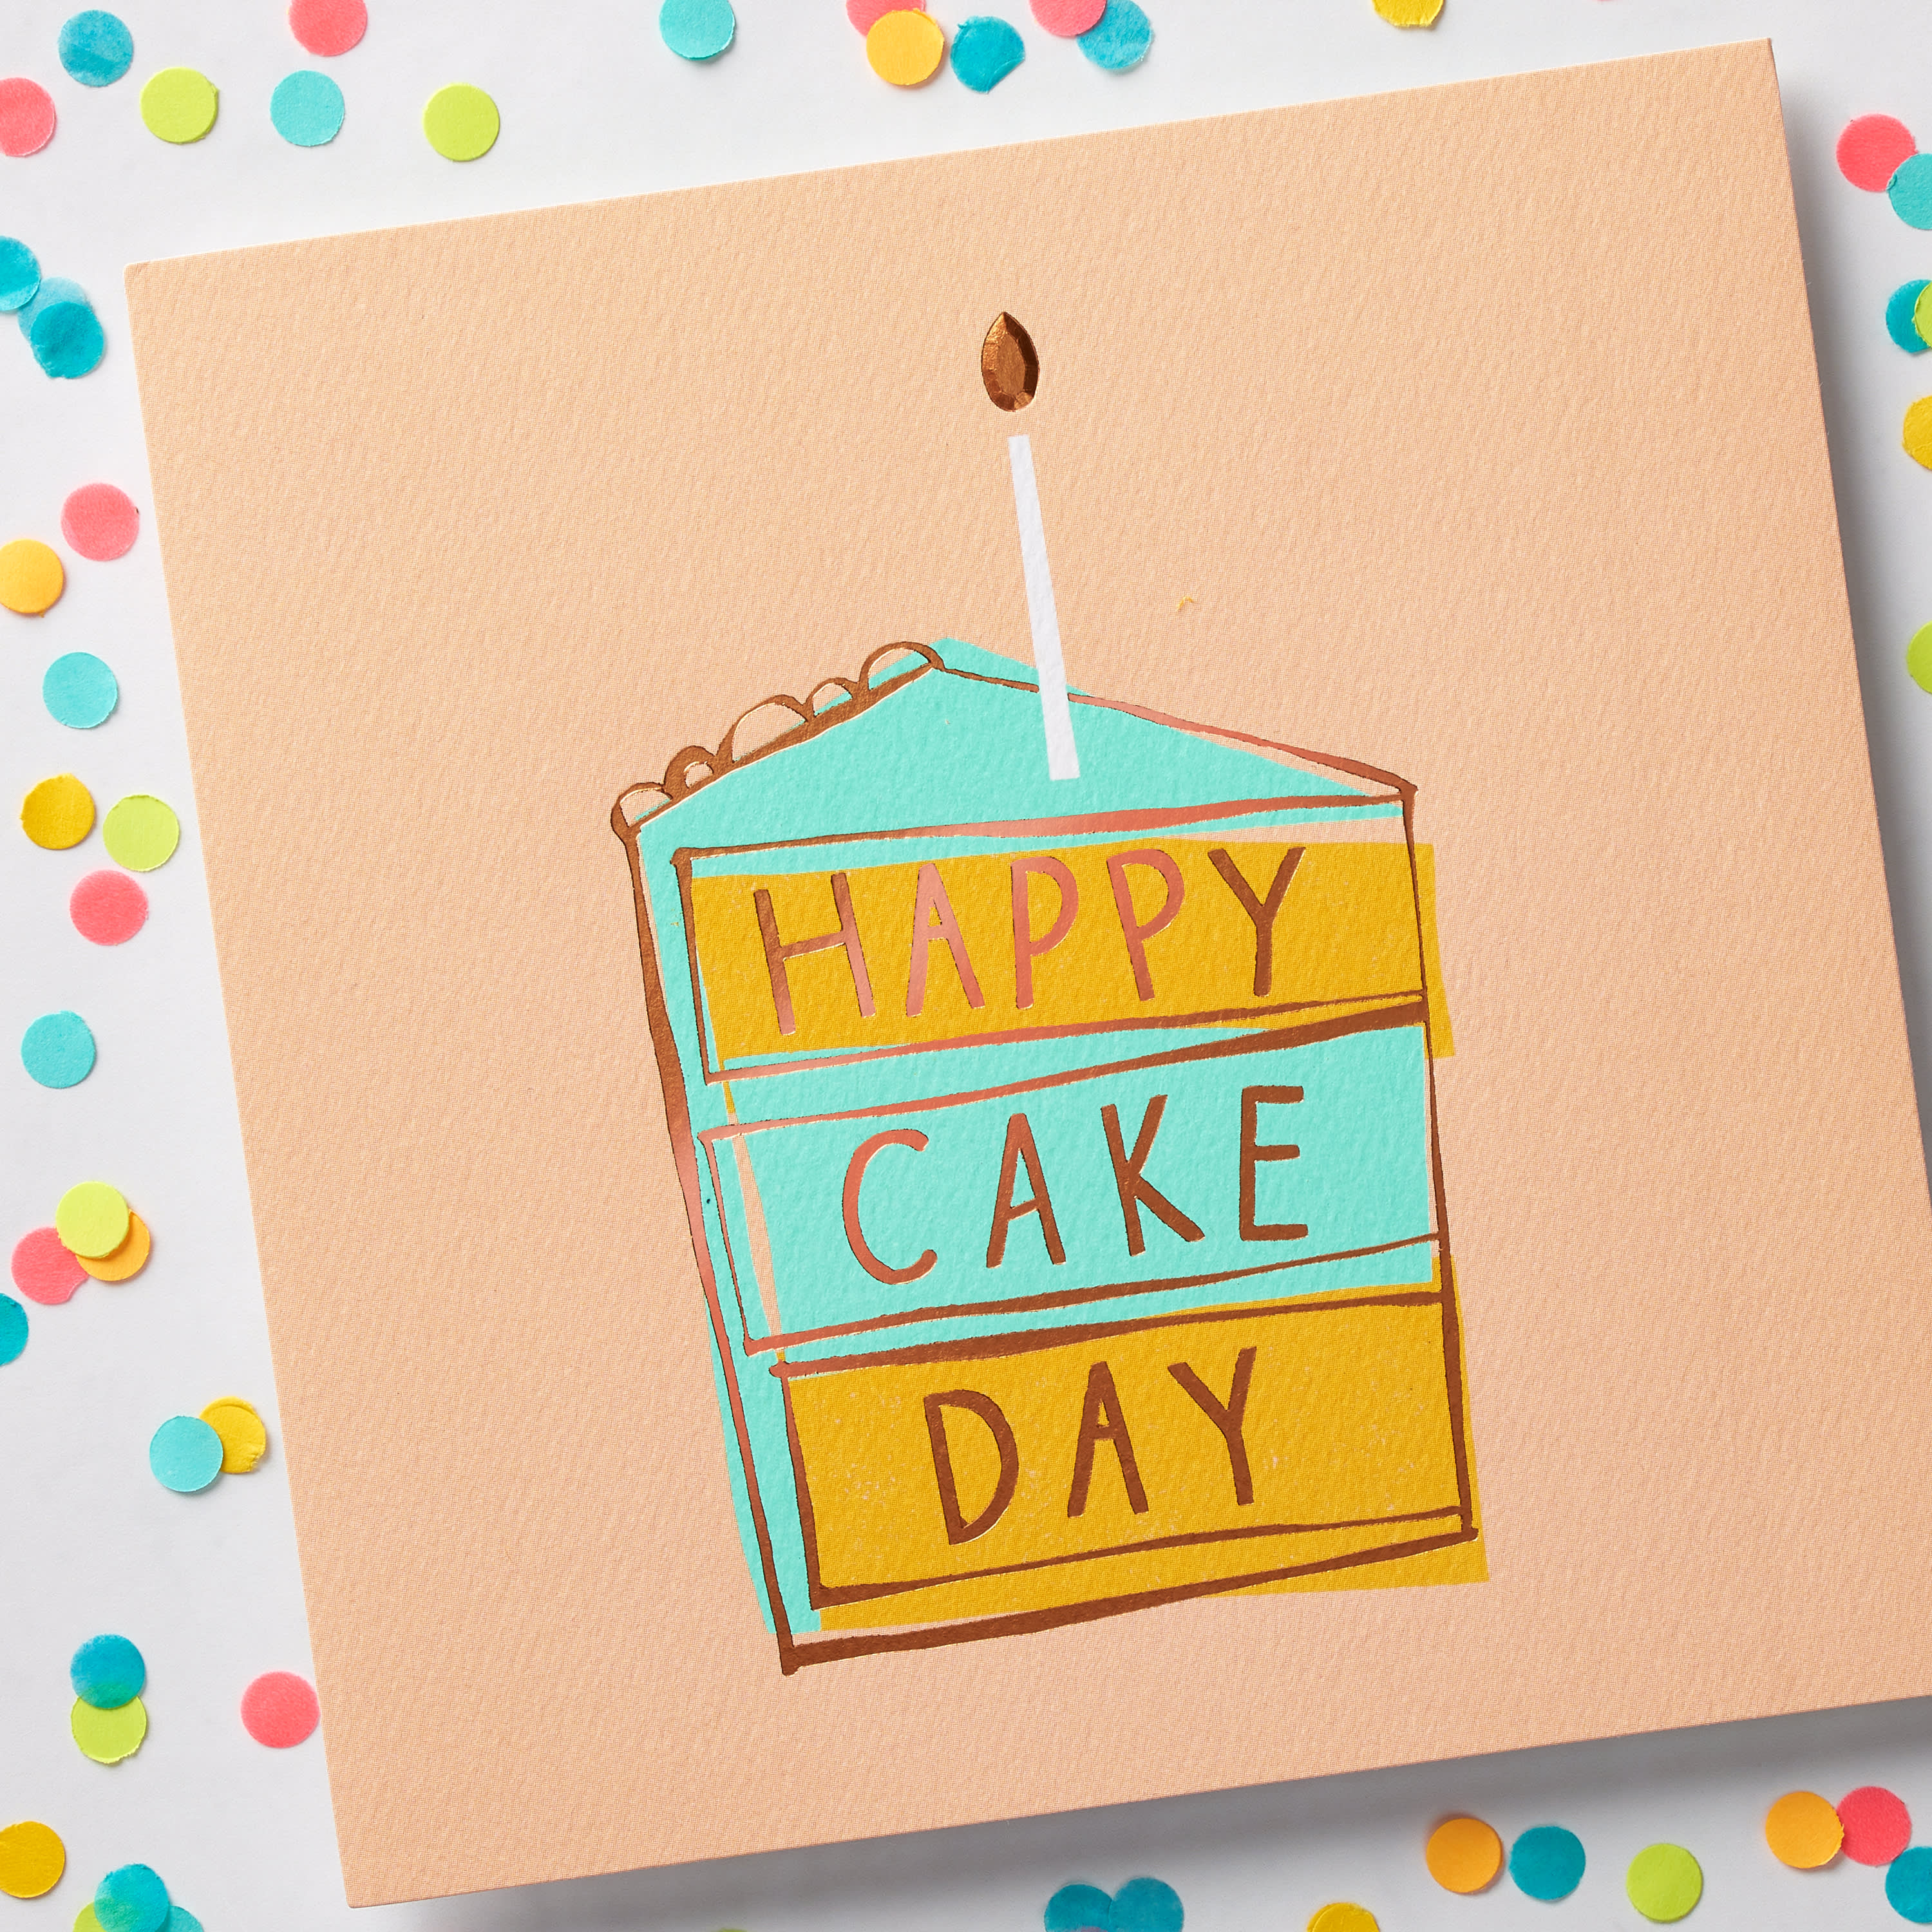 Cake Day Birthday Card image